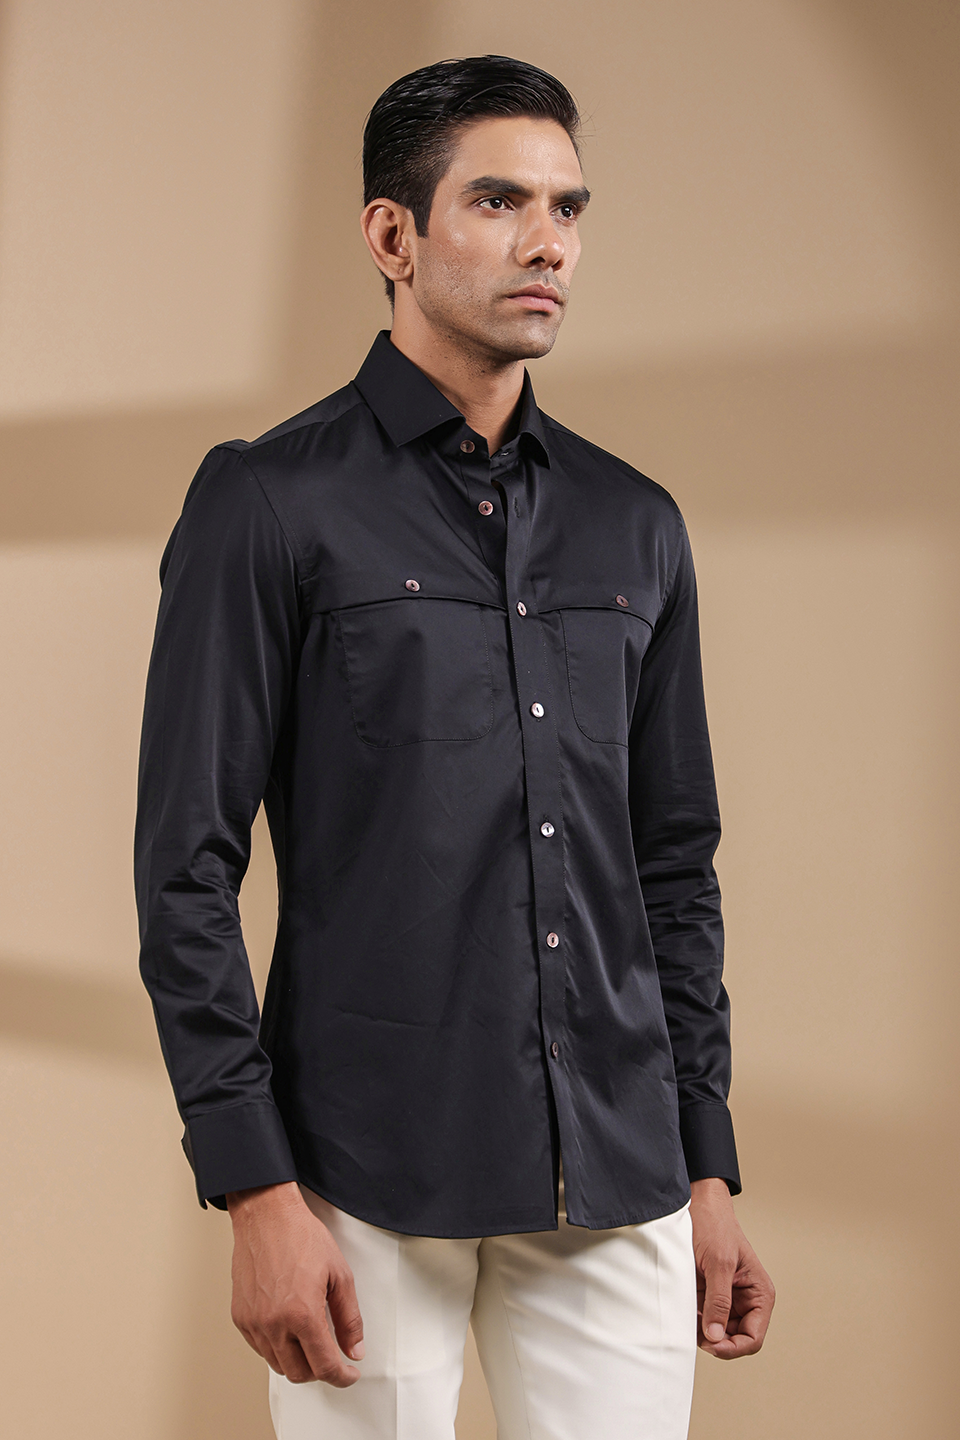 Black Full Sleeves Patch Pocket Shirt